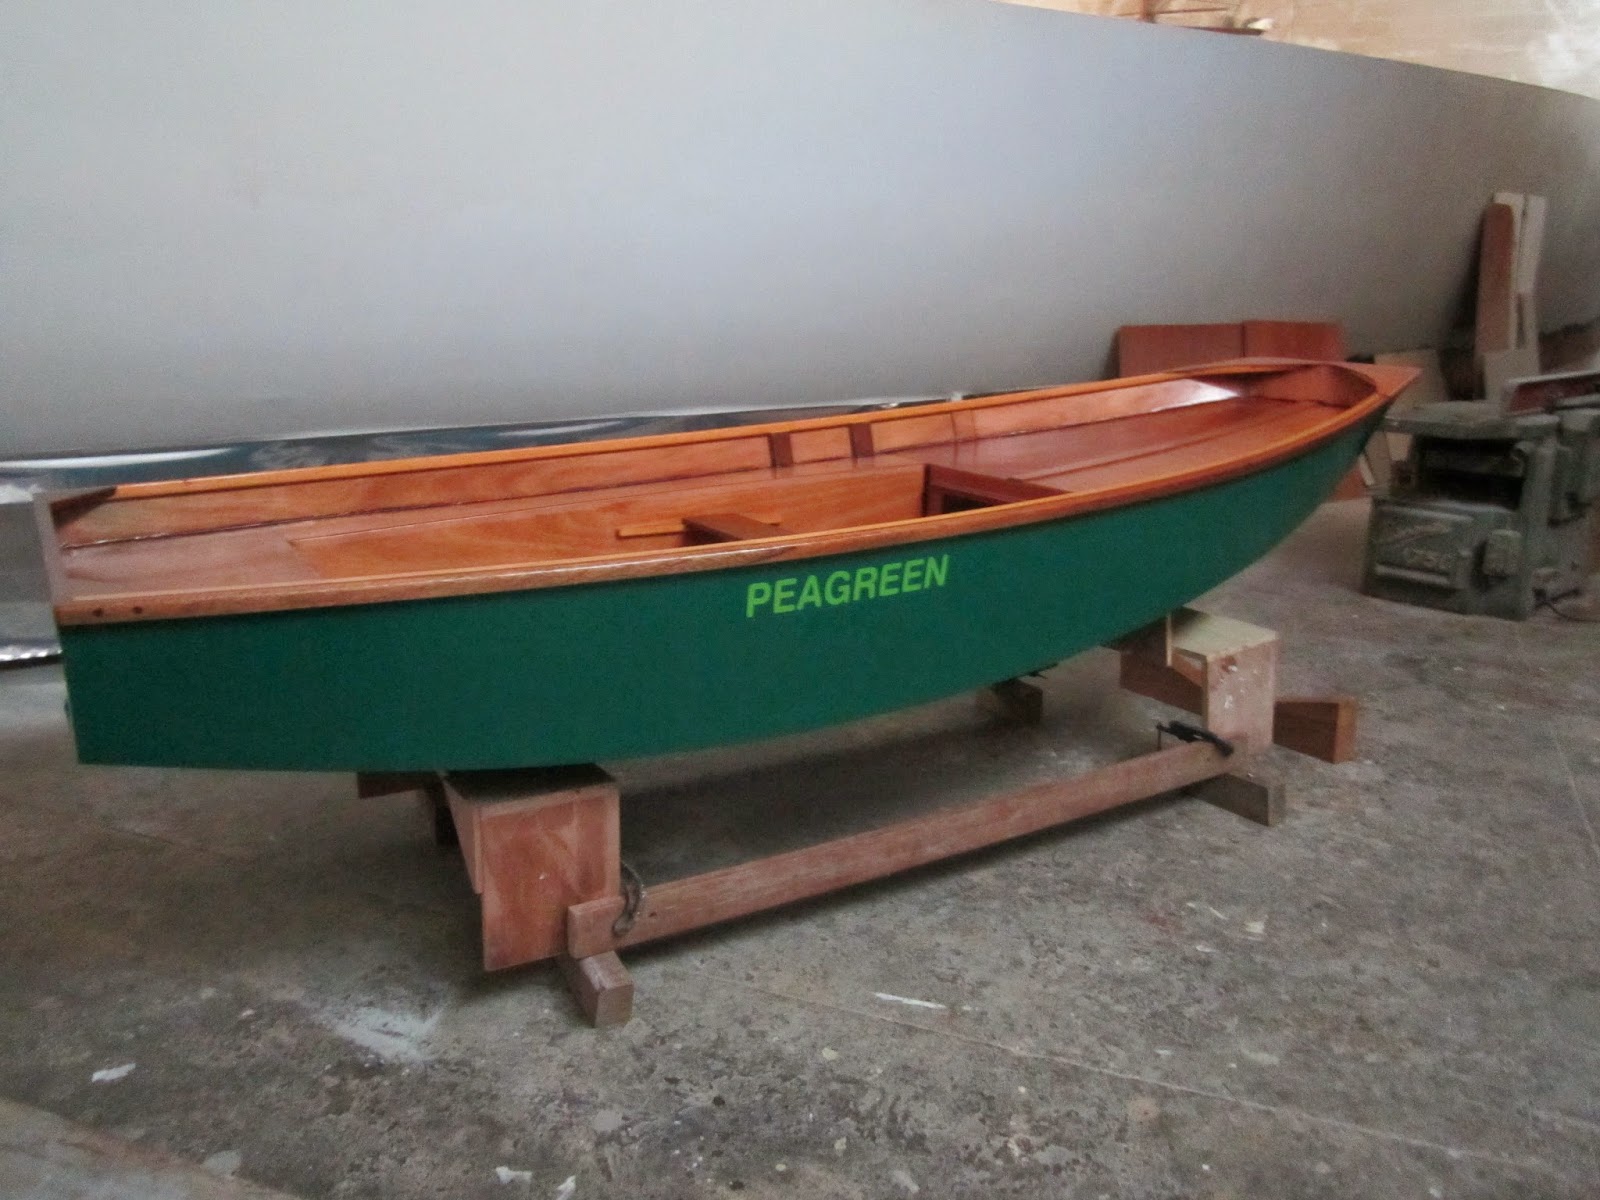 ckd boats - roy mc bride: mirror dinghy for sale, cape